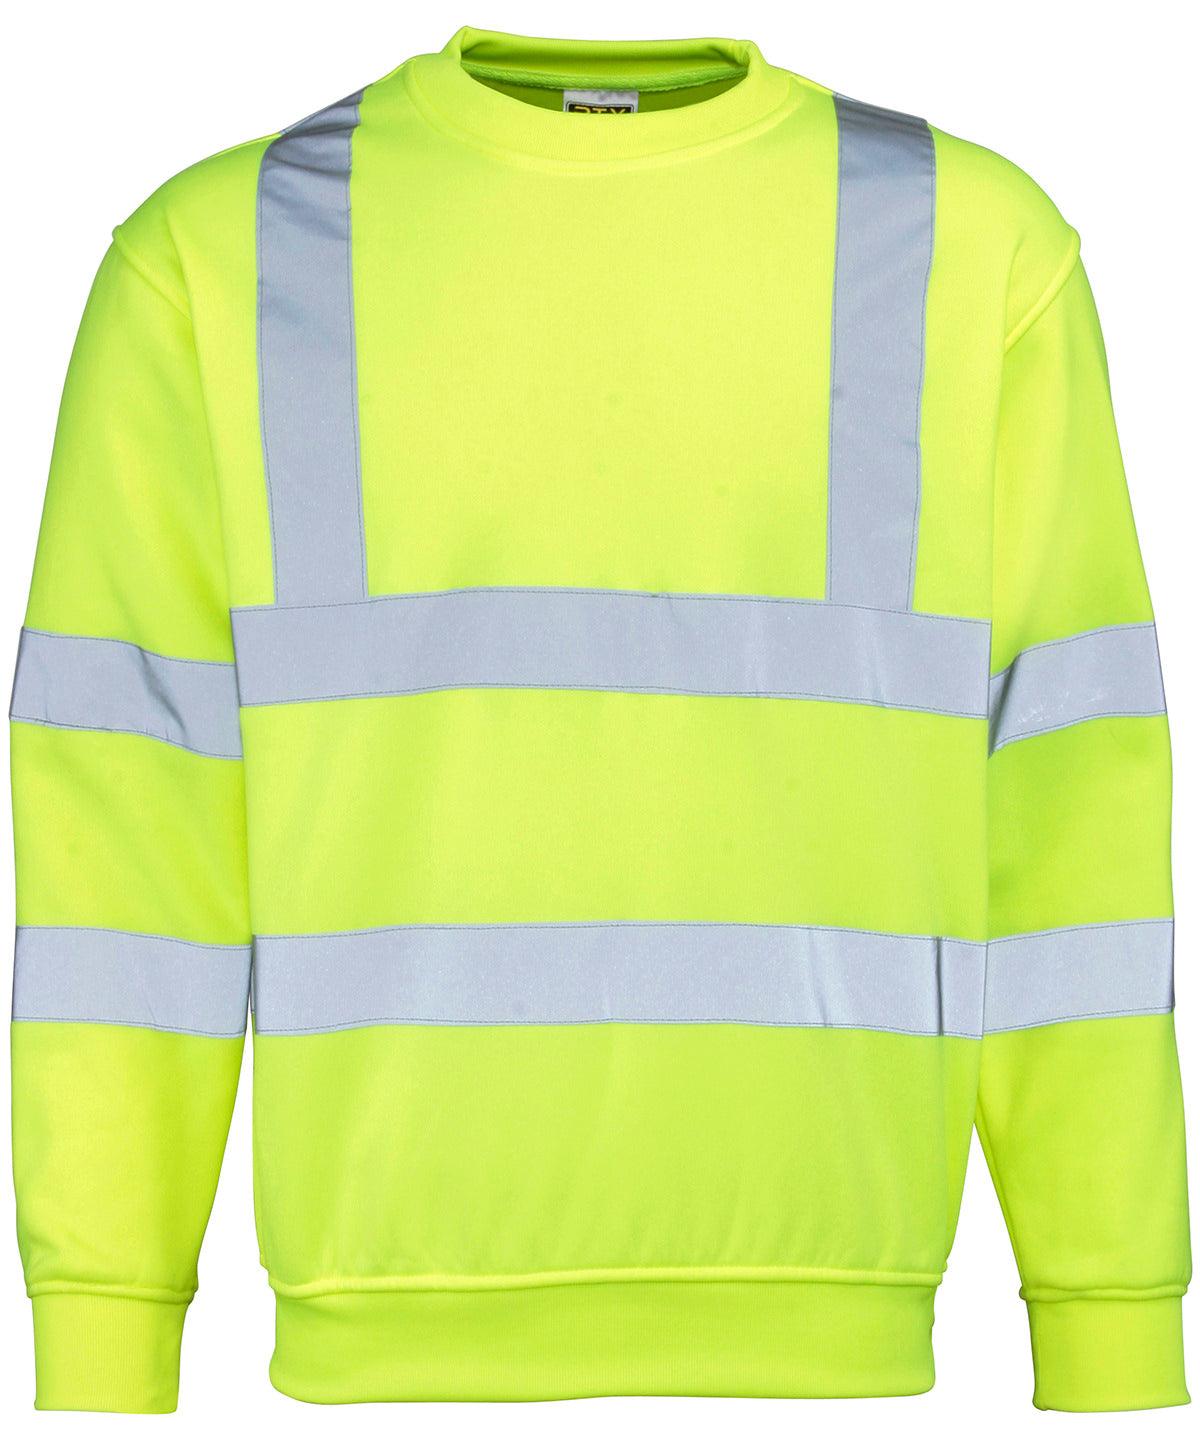 Fluorescent Yellow - High visibility sweatshirt Sweatshirts Last Chance to Buy Plus Sizes, Safetywear, Sweatshirts, Workwear Schoolwear Centres